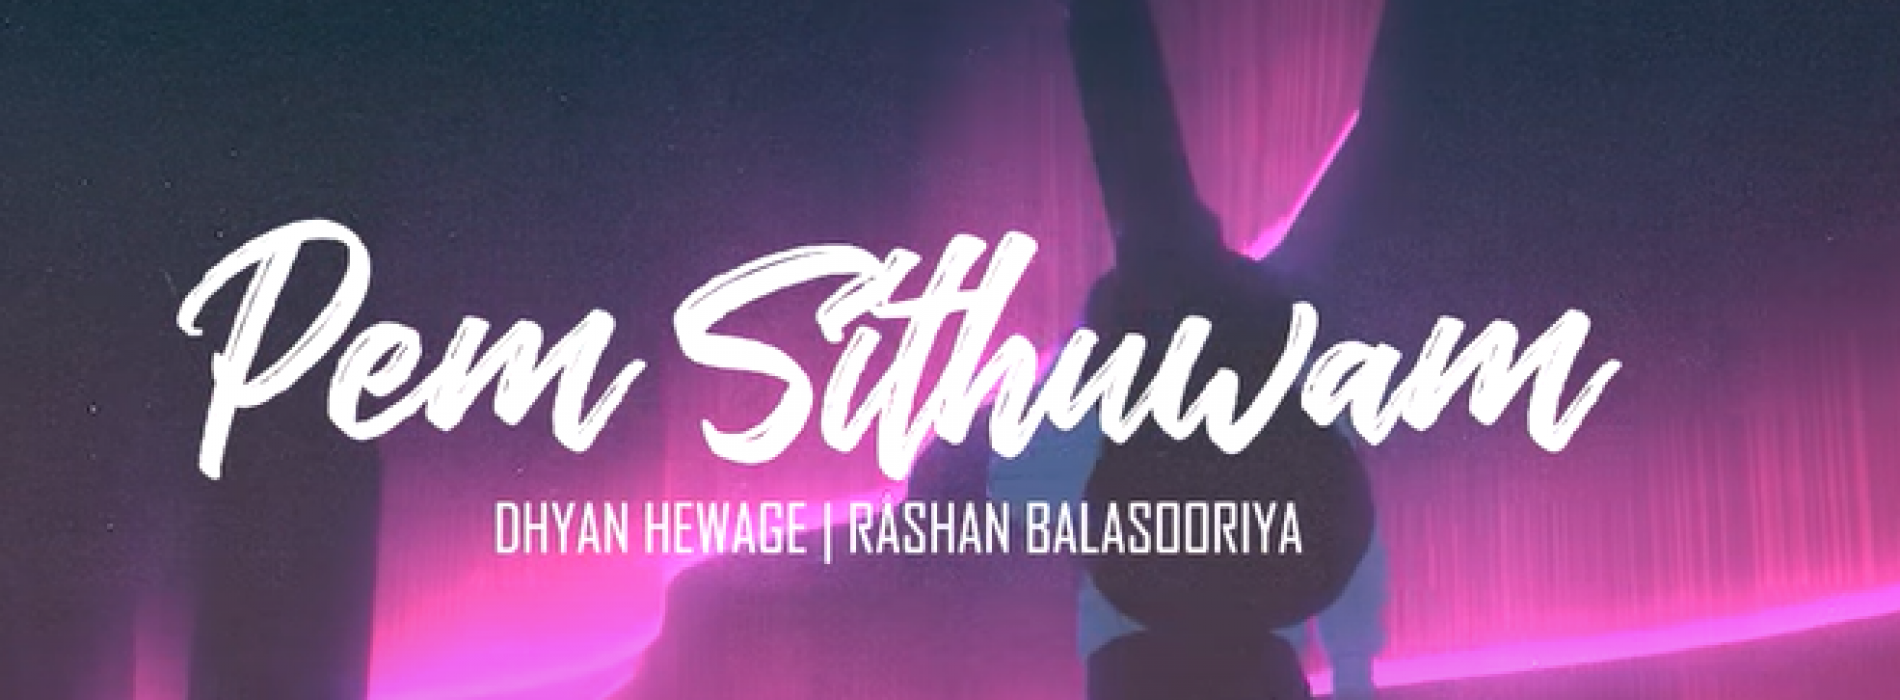 New Music : Dhyan Hewage & Rashan Balasooriya – Pem Sithuwam (පෙම් සිතුවම්) | Official Lyric Video